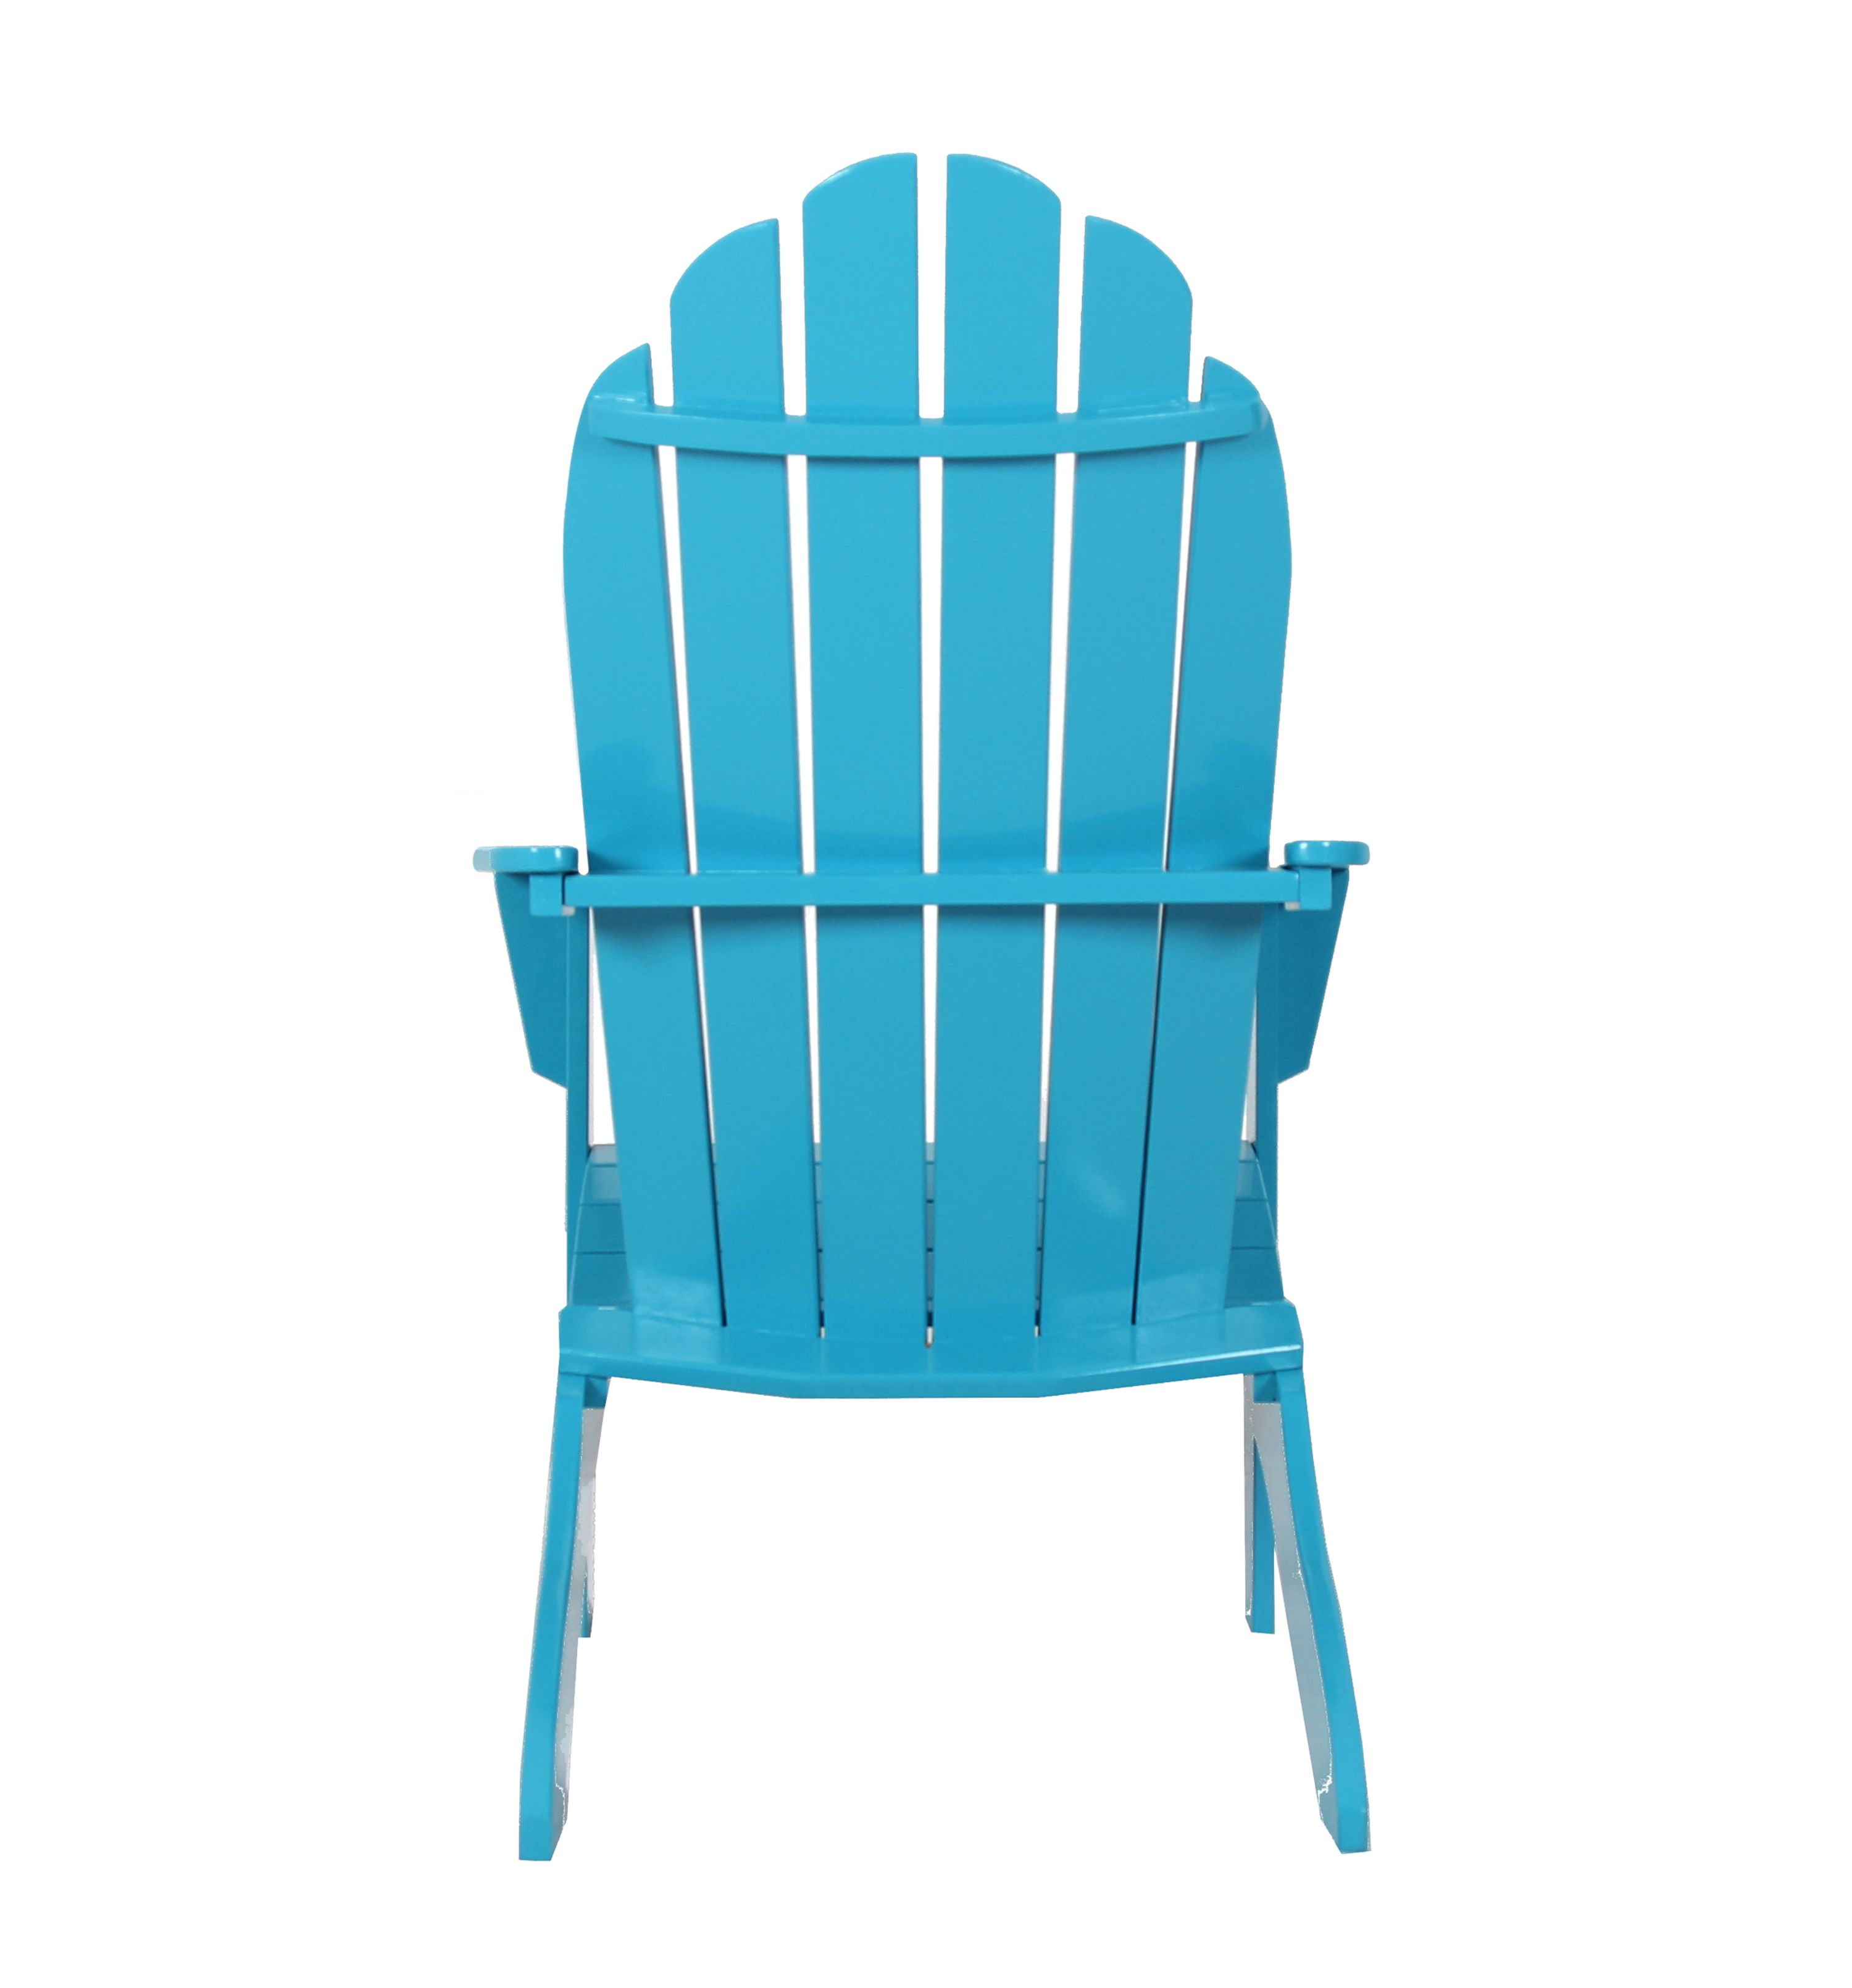 Mainstays Rubberwood Adirondack Chair - Turquoise - image 5 of 8